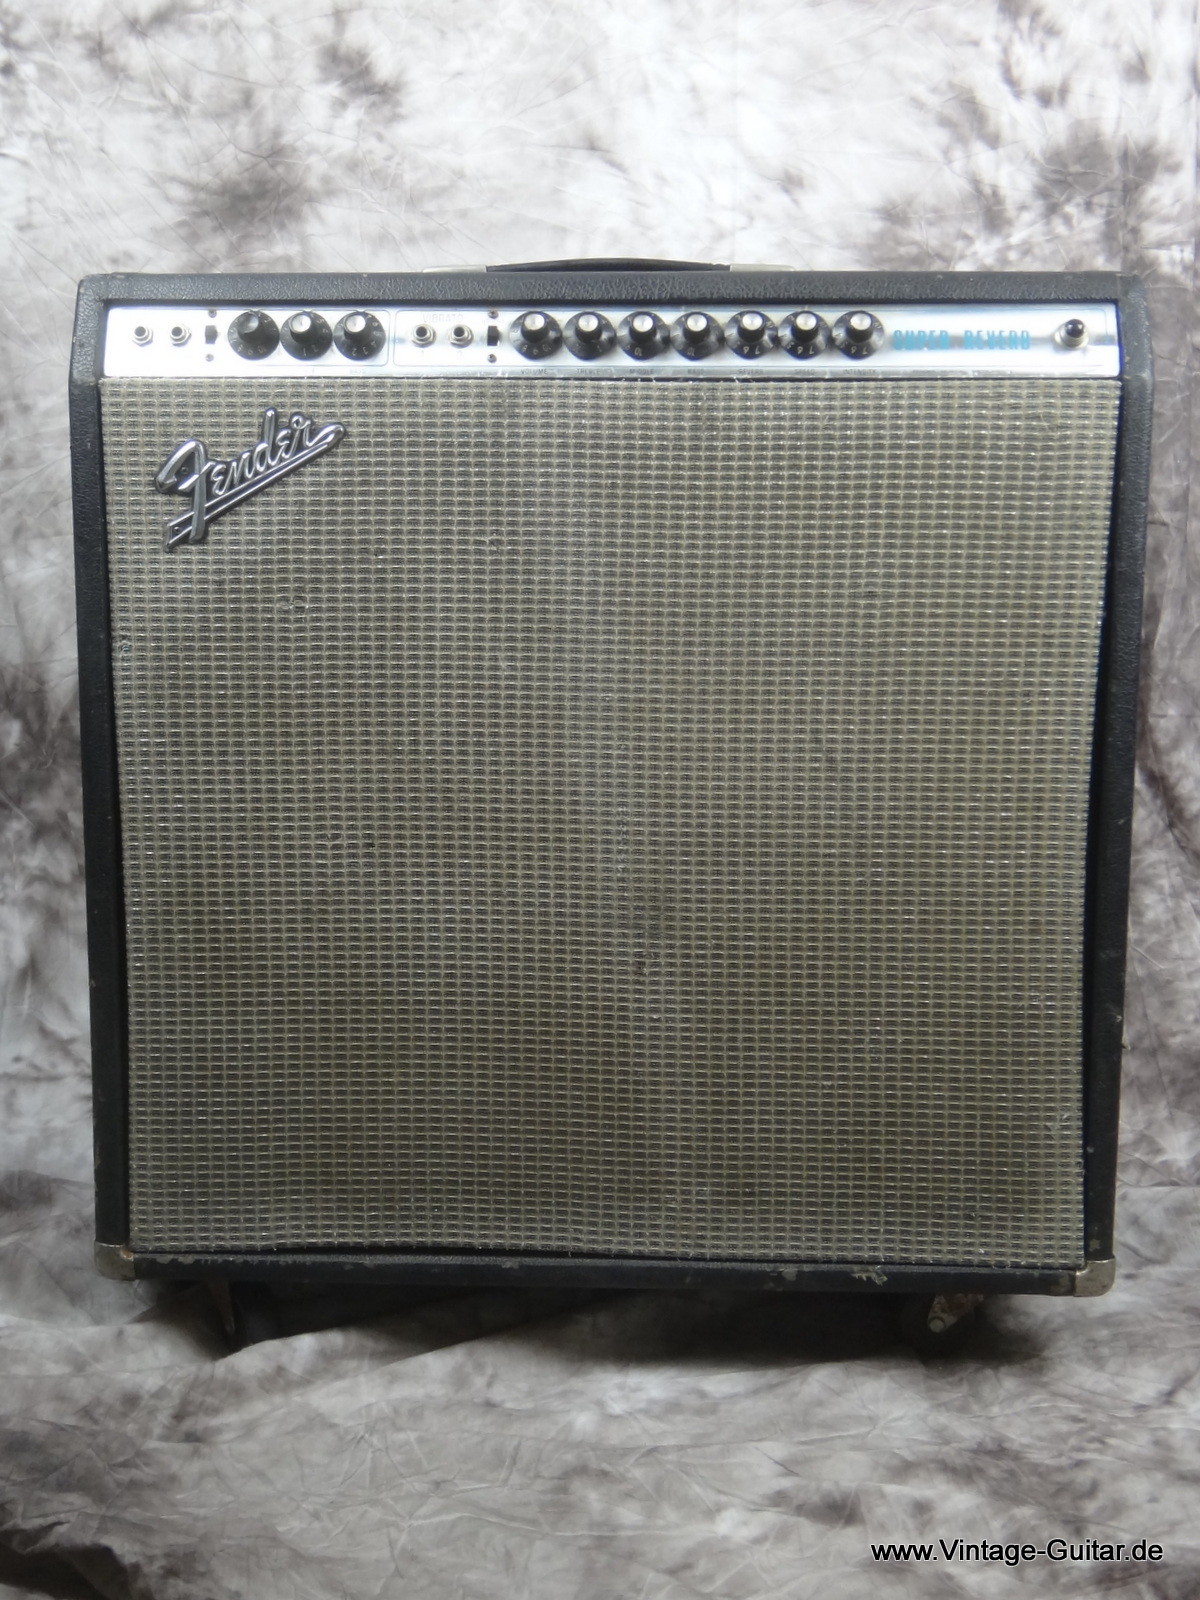 Fender-Super-Reverb-1972-45watts-001.JPG